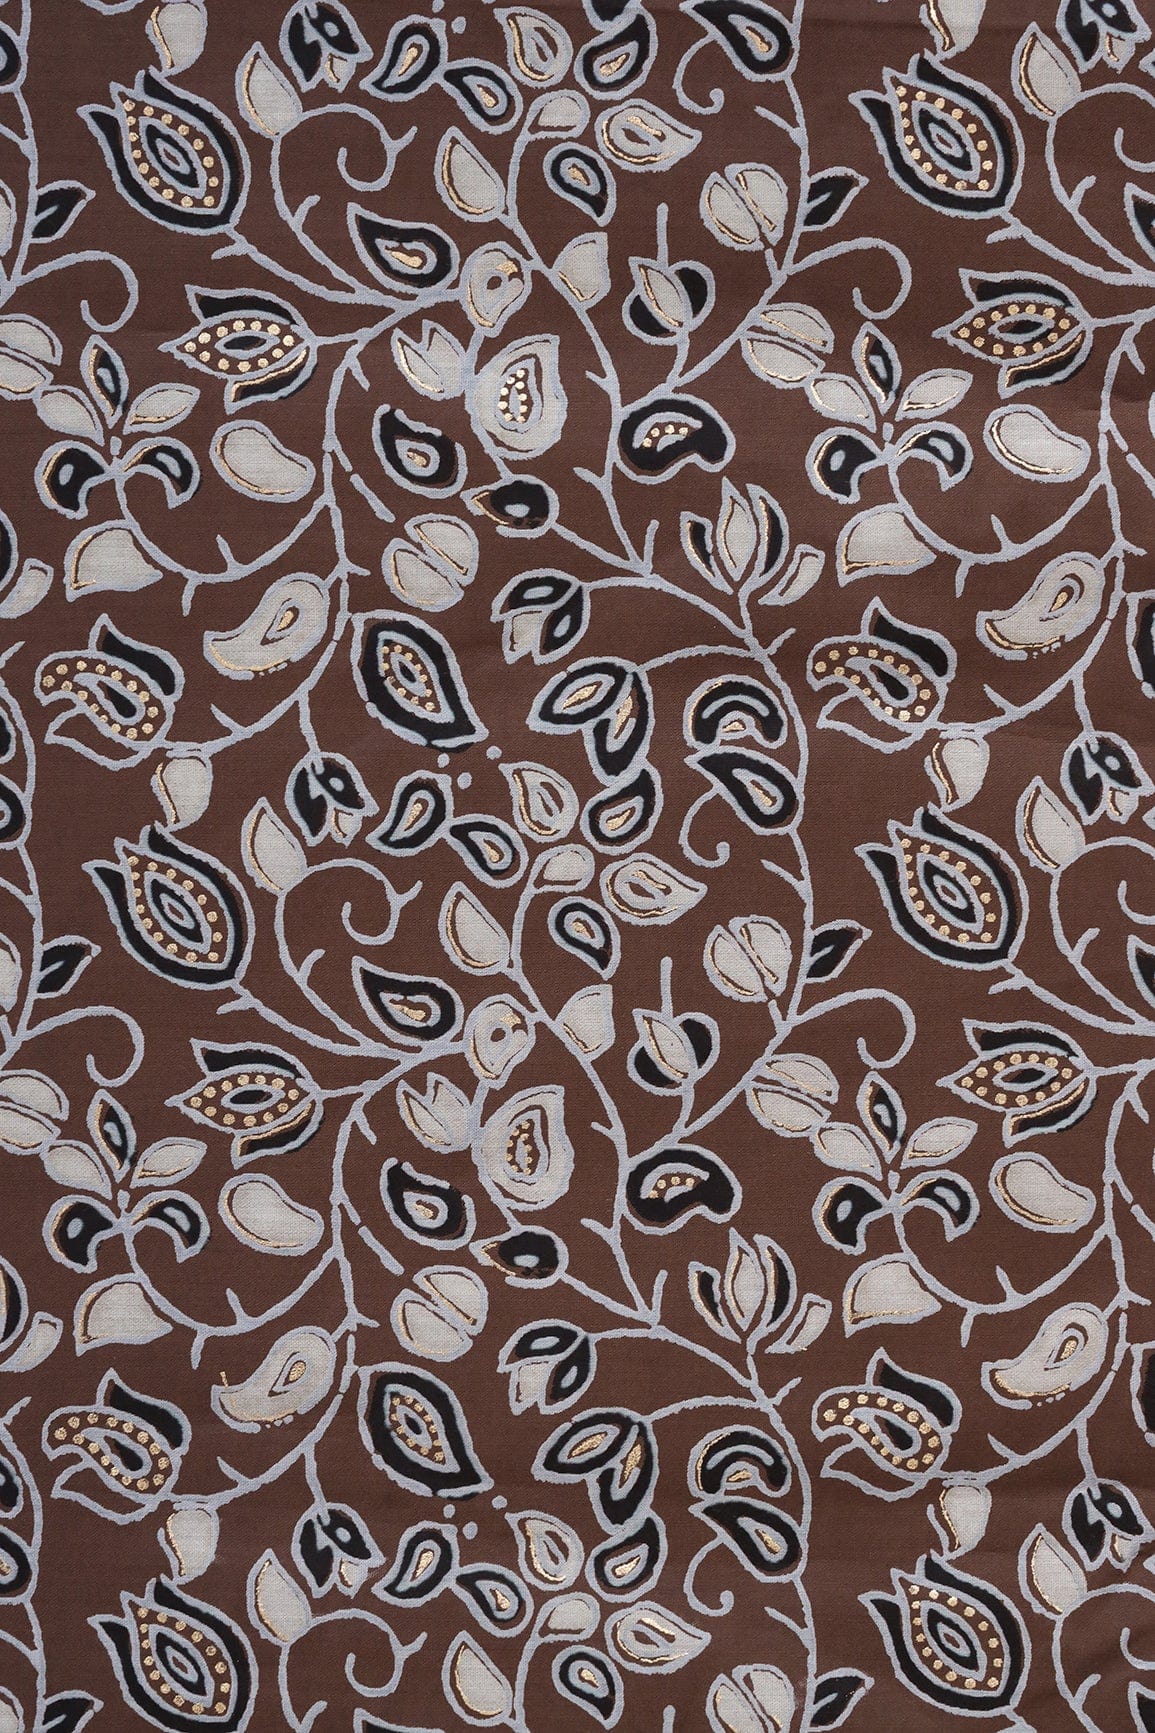 doeraa Prints Brown And Light Grey Floral Pattern Foil Screen Print On Chanderi Silk Fabric